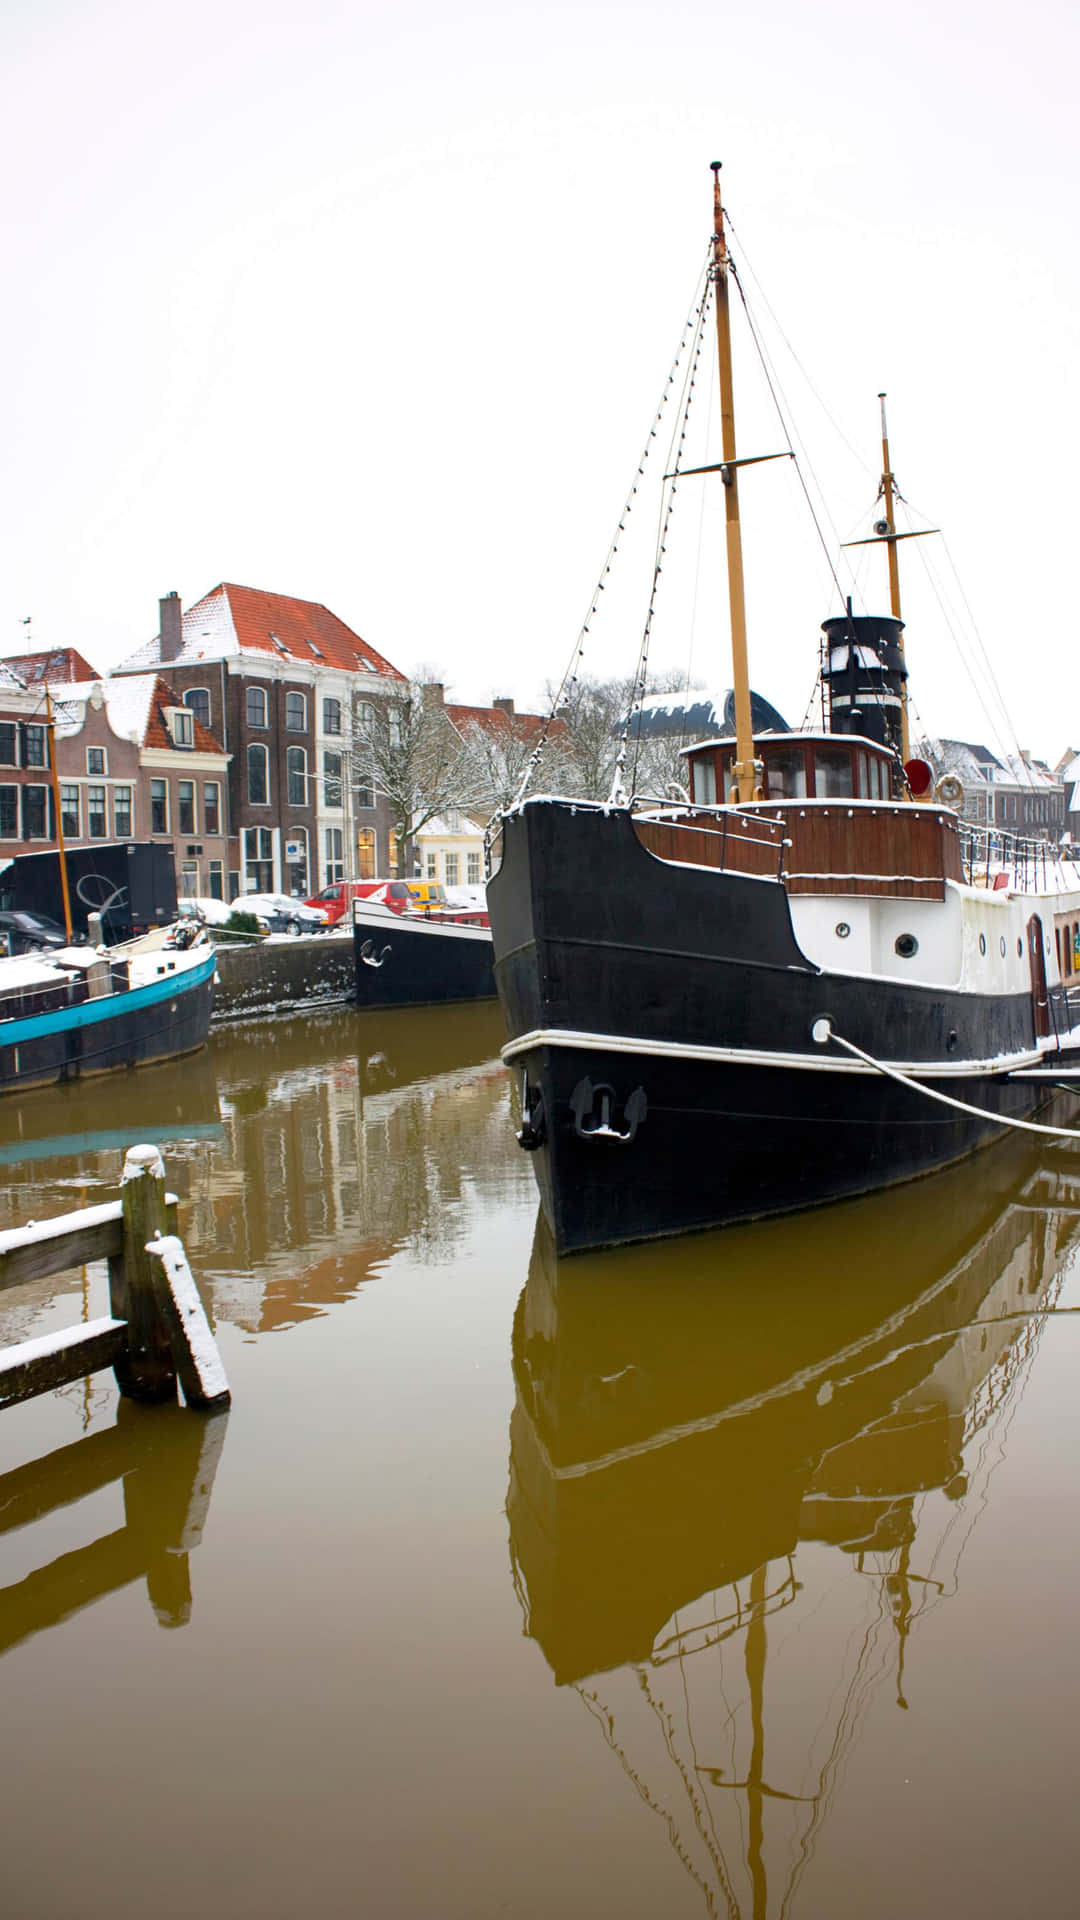 Zwolle Winter Canal Boats Wallpaper